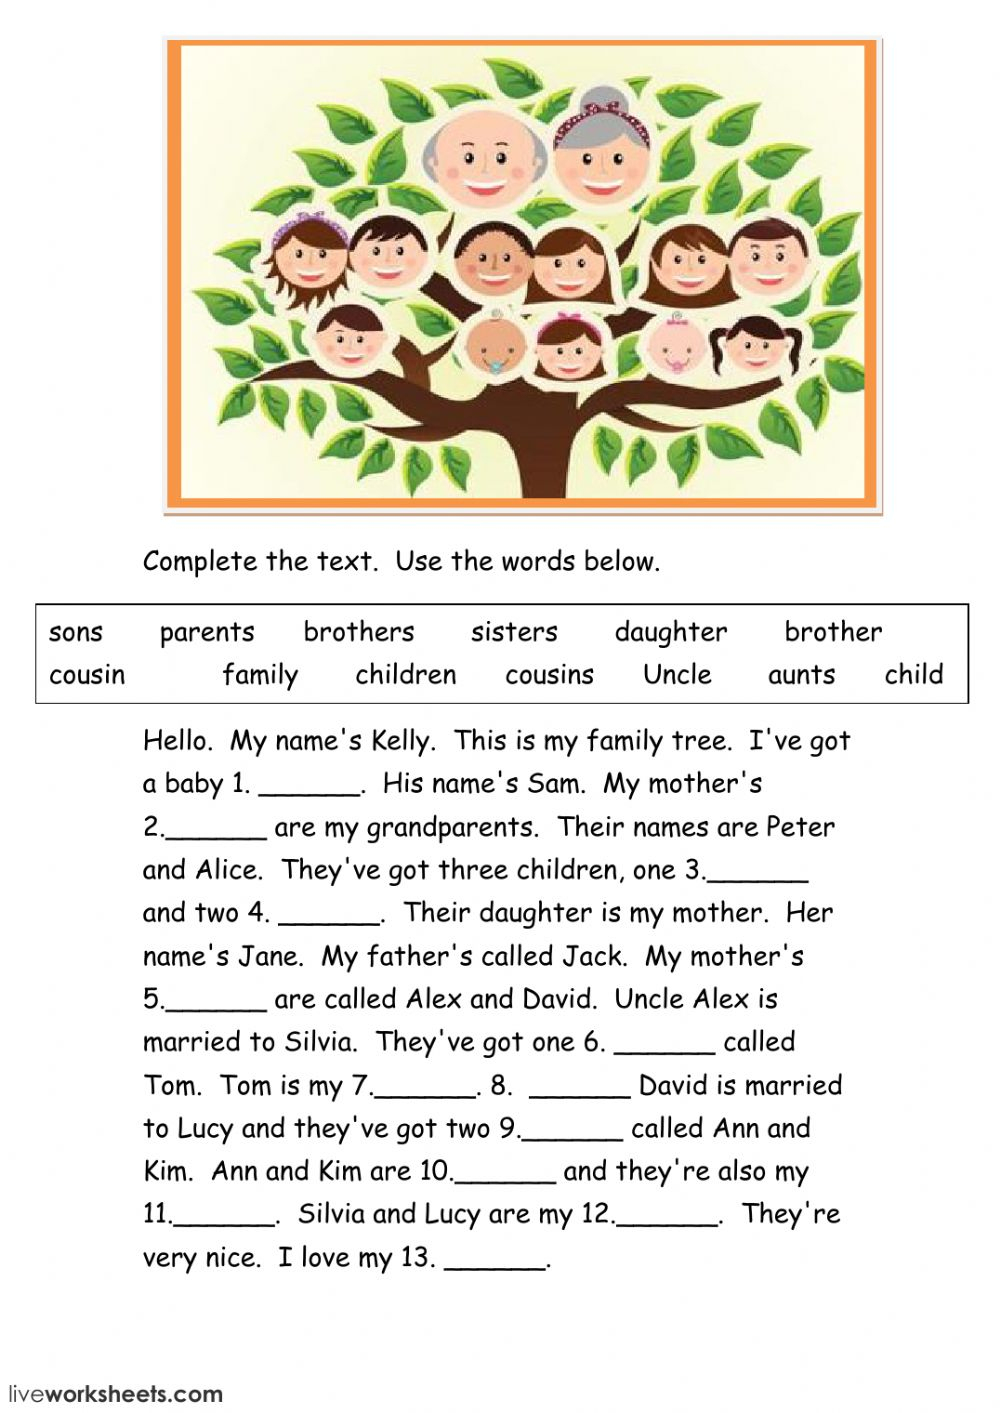 Family Tree: The Family Exercise